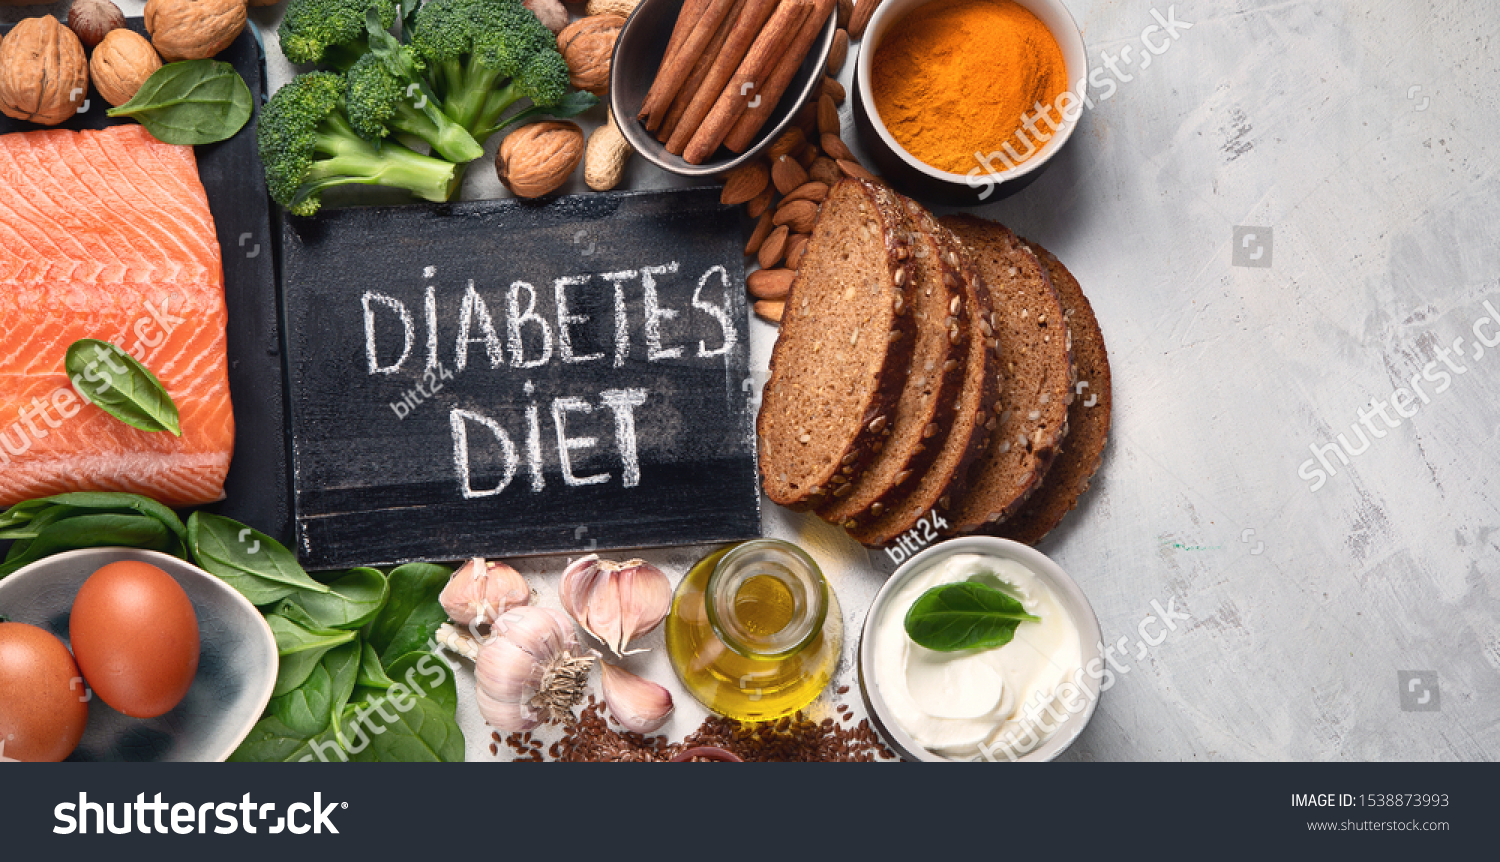 85,180 Diabetes diet Images, Stock Photos & Vectors | Shutterstock